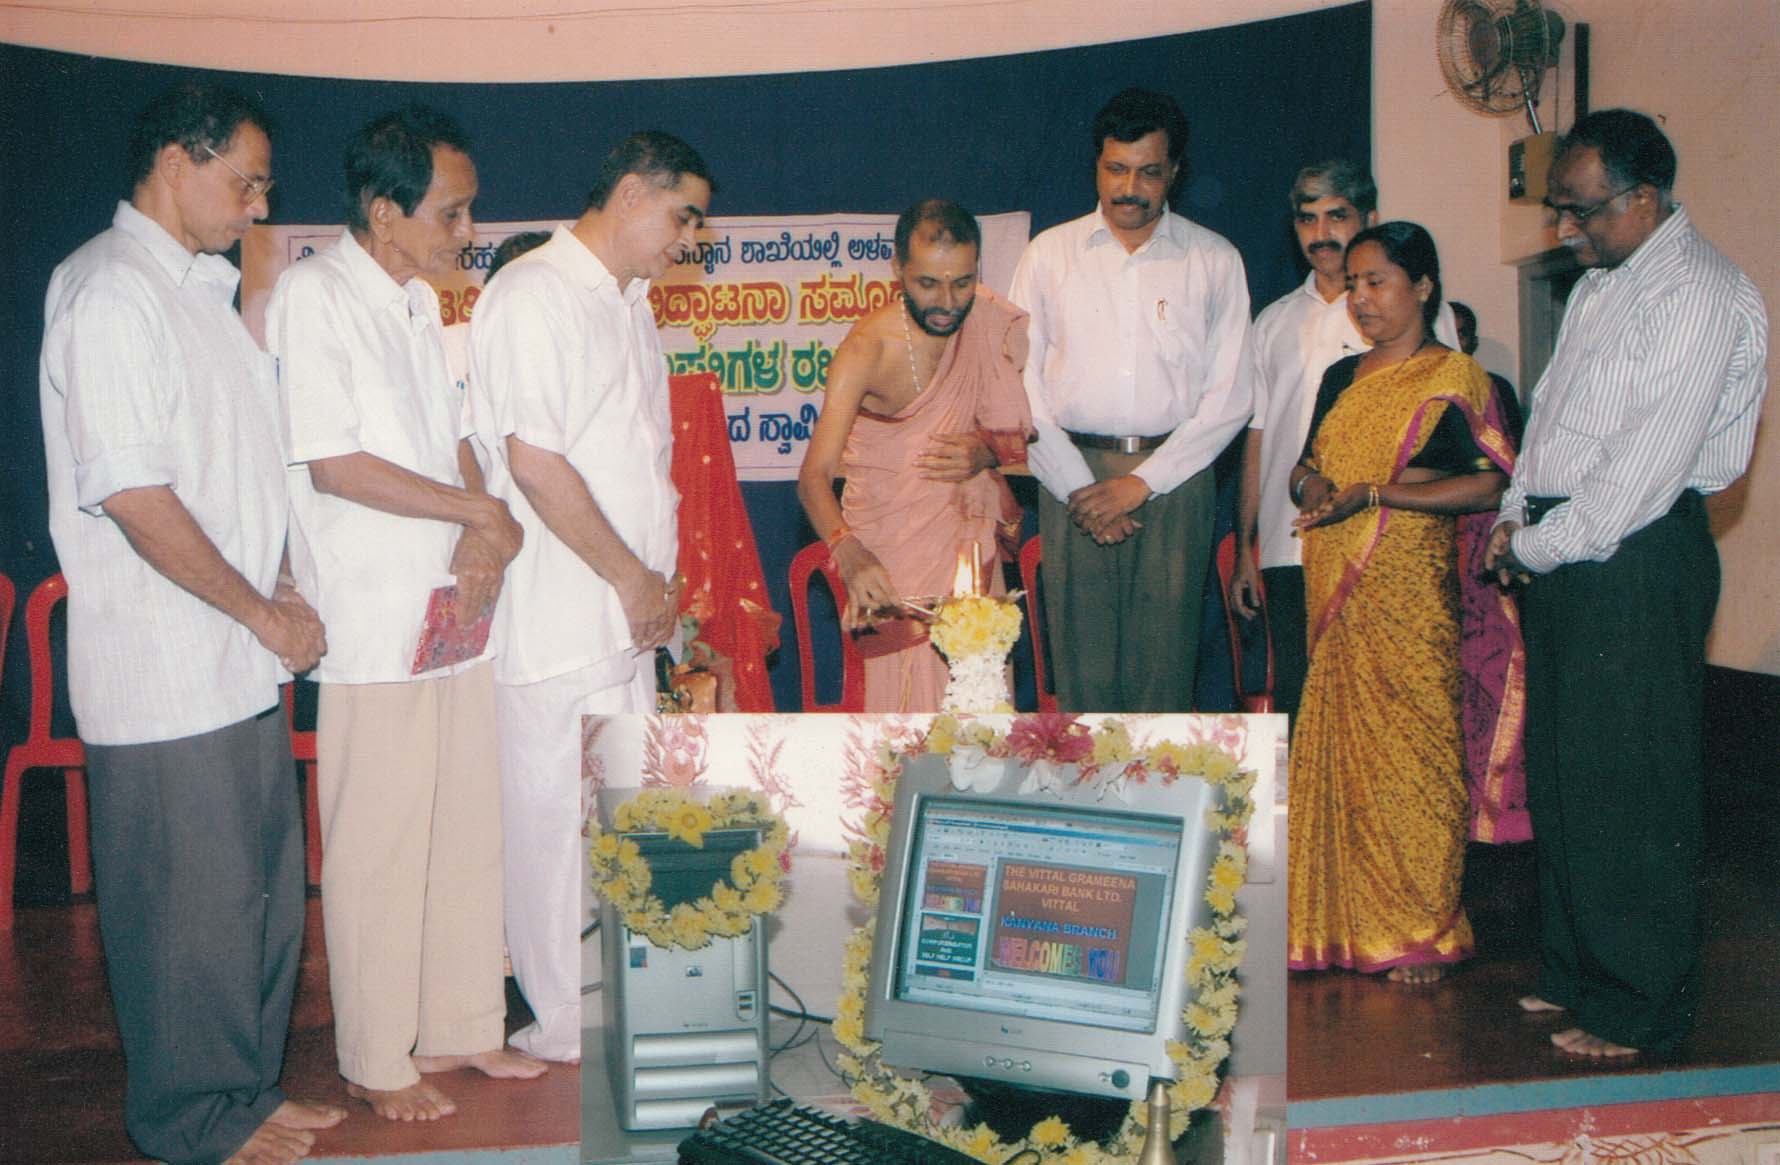 Inauguration of Computer by Odiyur Sri Sri Gurudevananda Swamiji in 2005